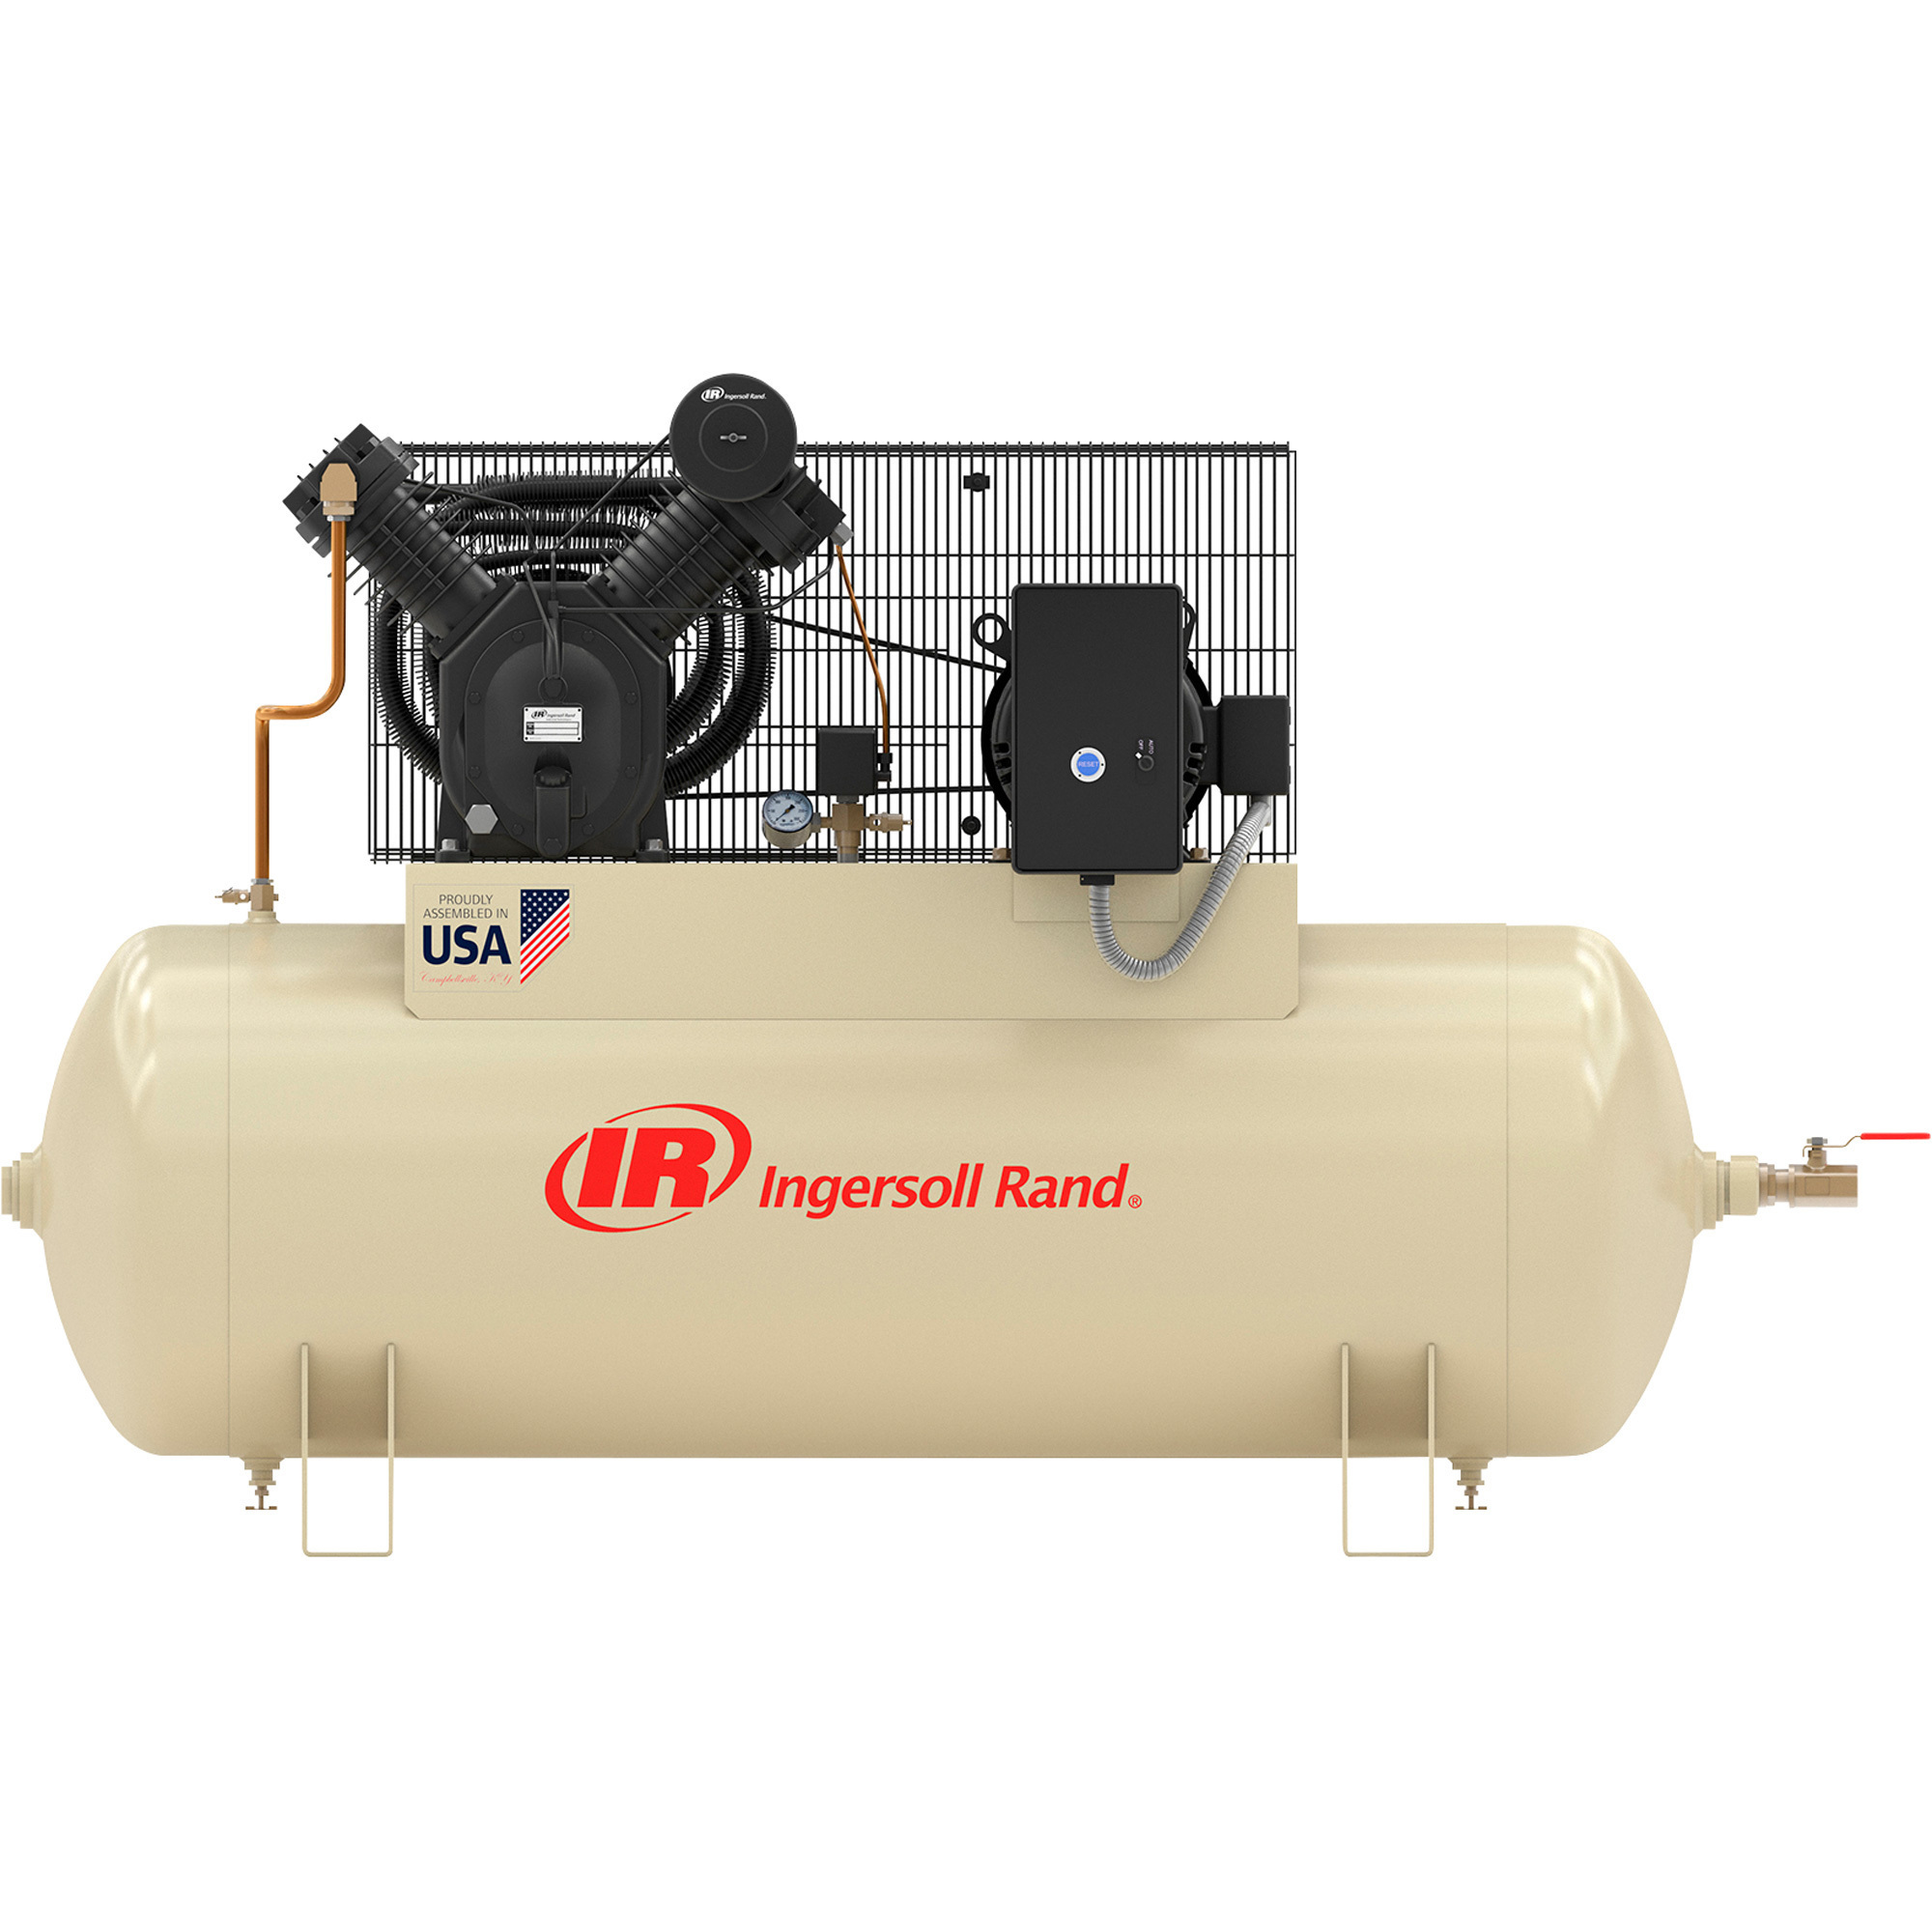 Ingersoll Rand Type-30 Reciprocating Air Compressor, 15 HP, 230 Volt, 3 Phase, 120 Gallon Horizontal, Model 7100E15-V